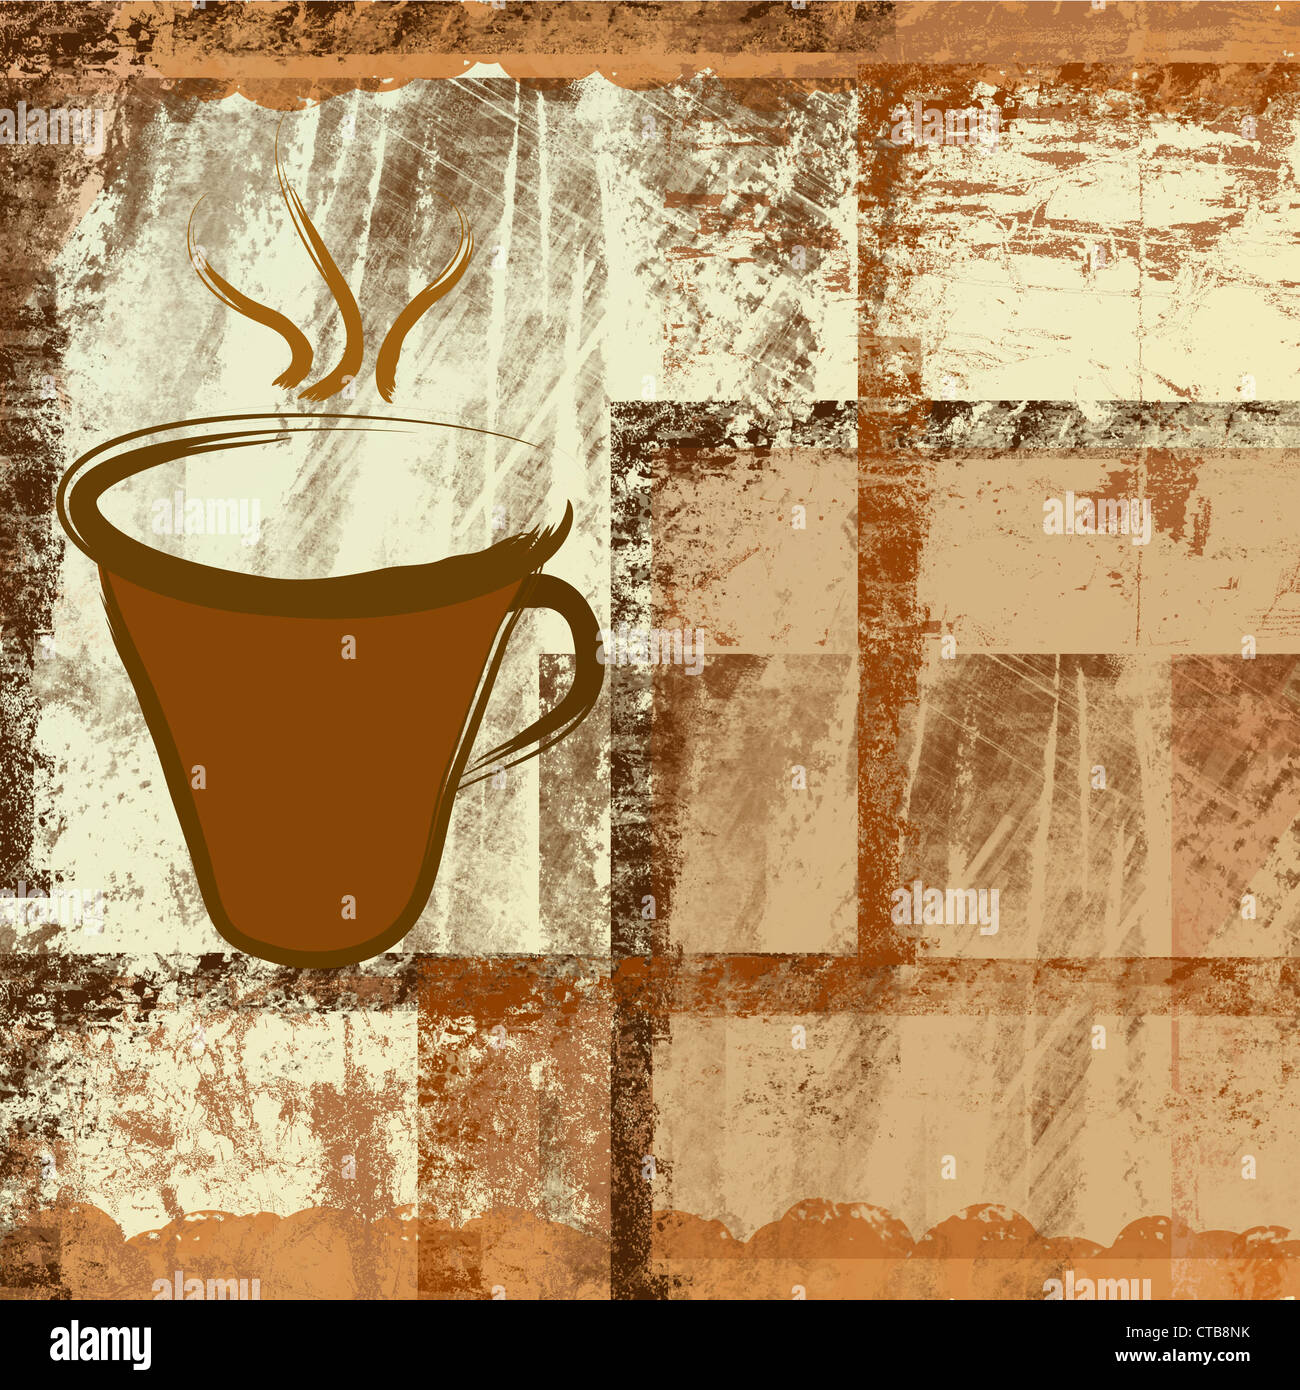 Brown mug illustration on grunge texture Stock Photo